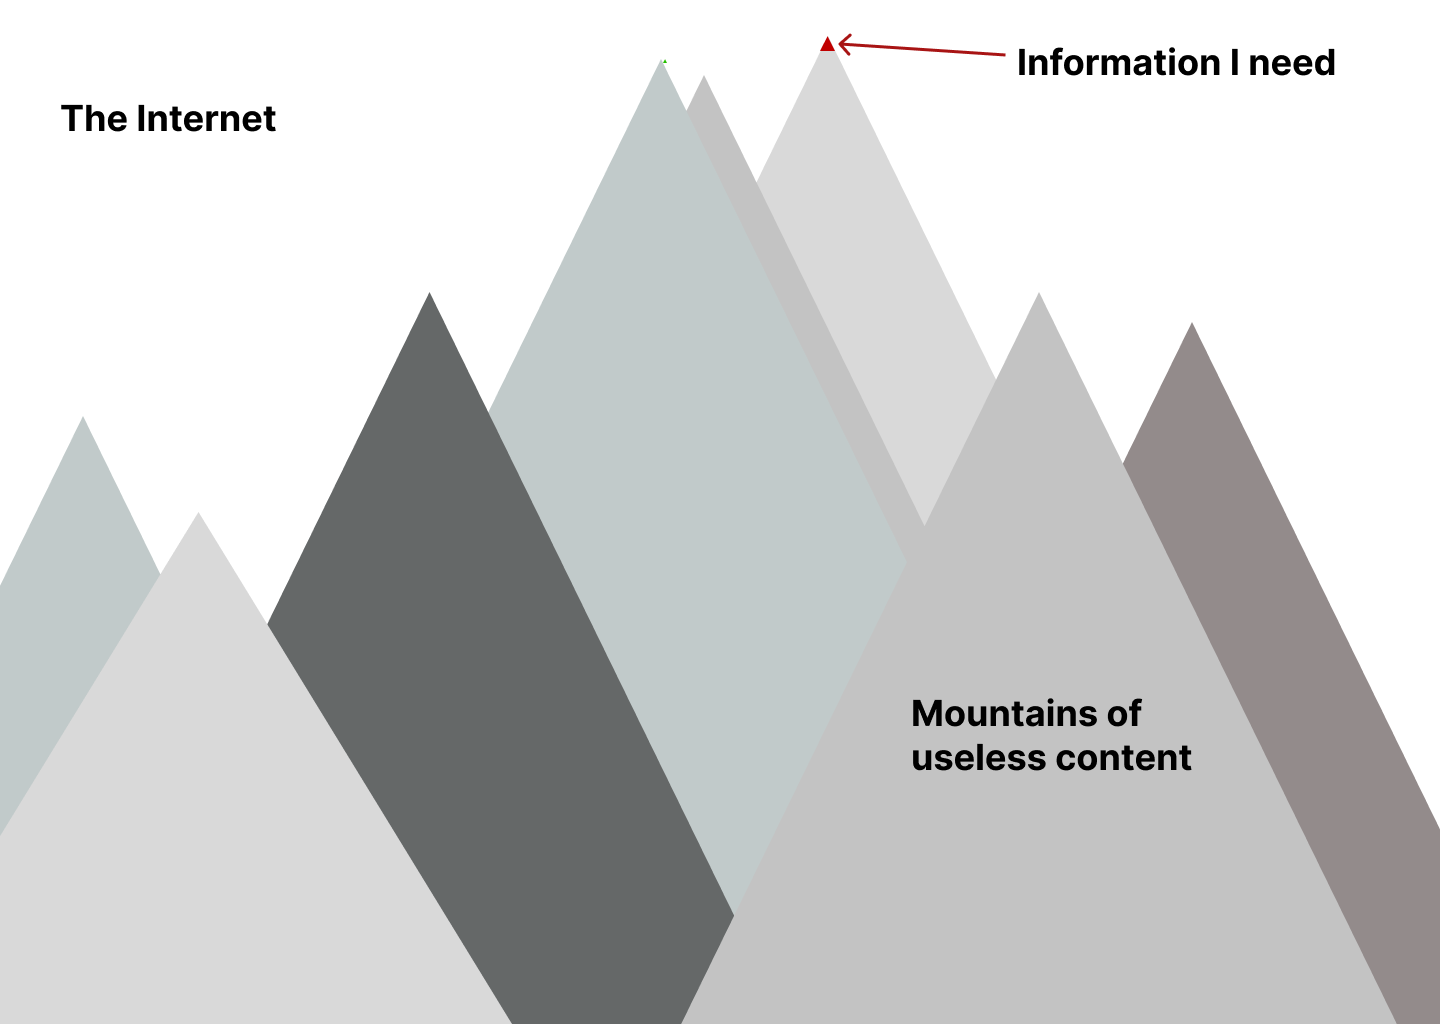 Internet mountains